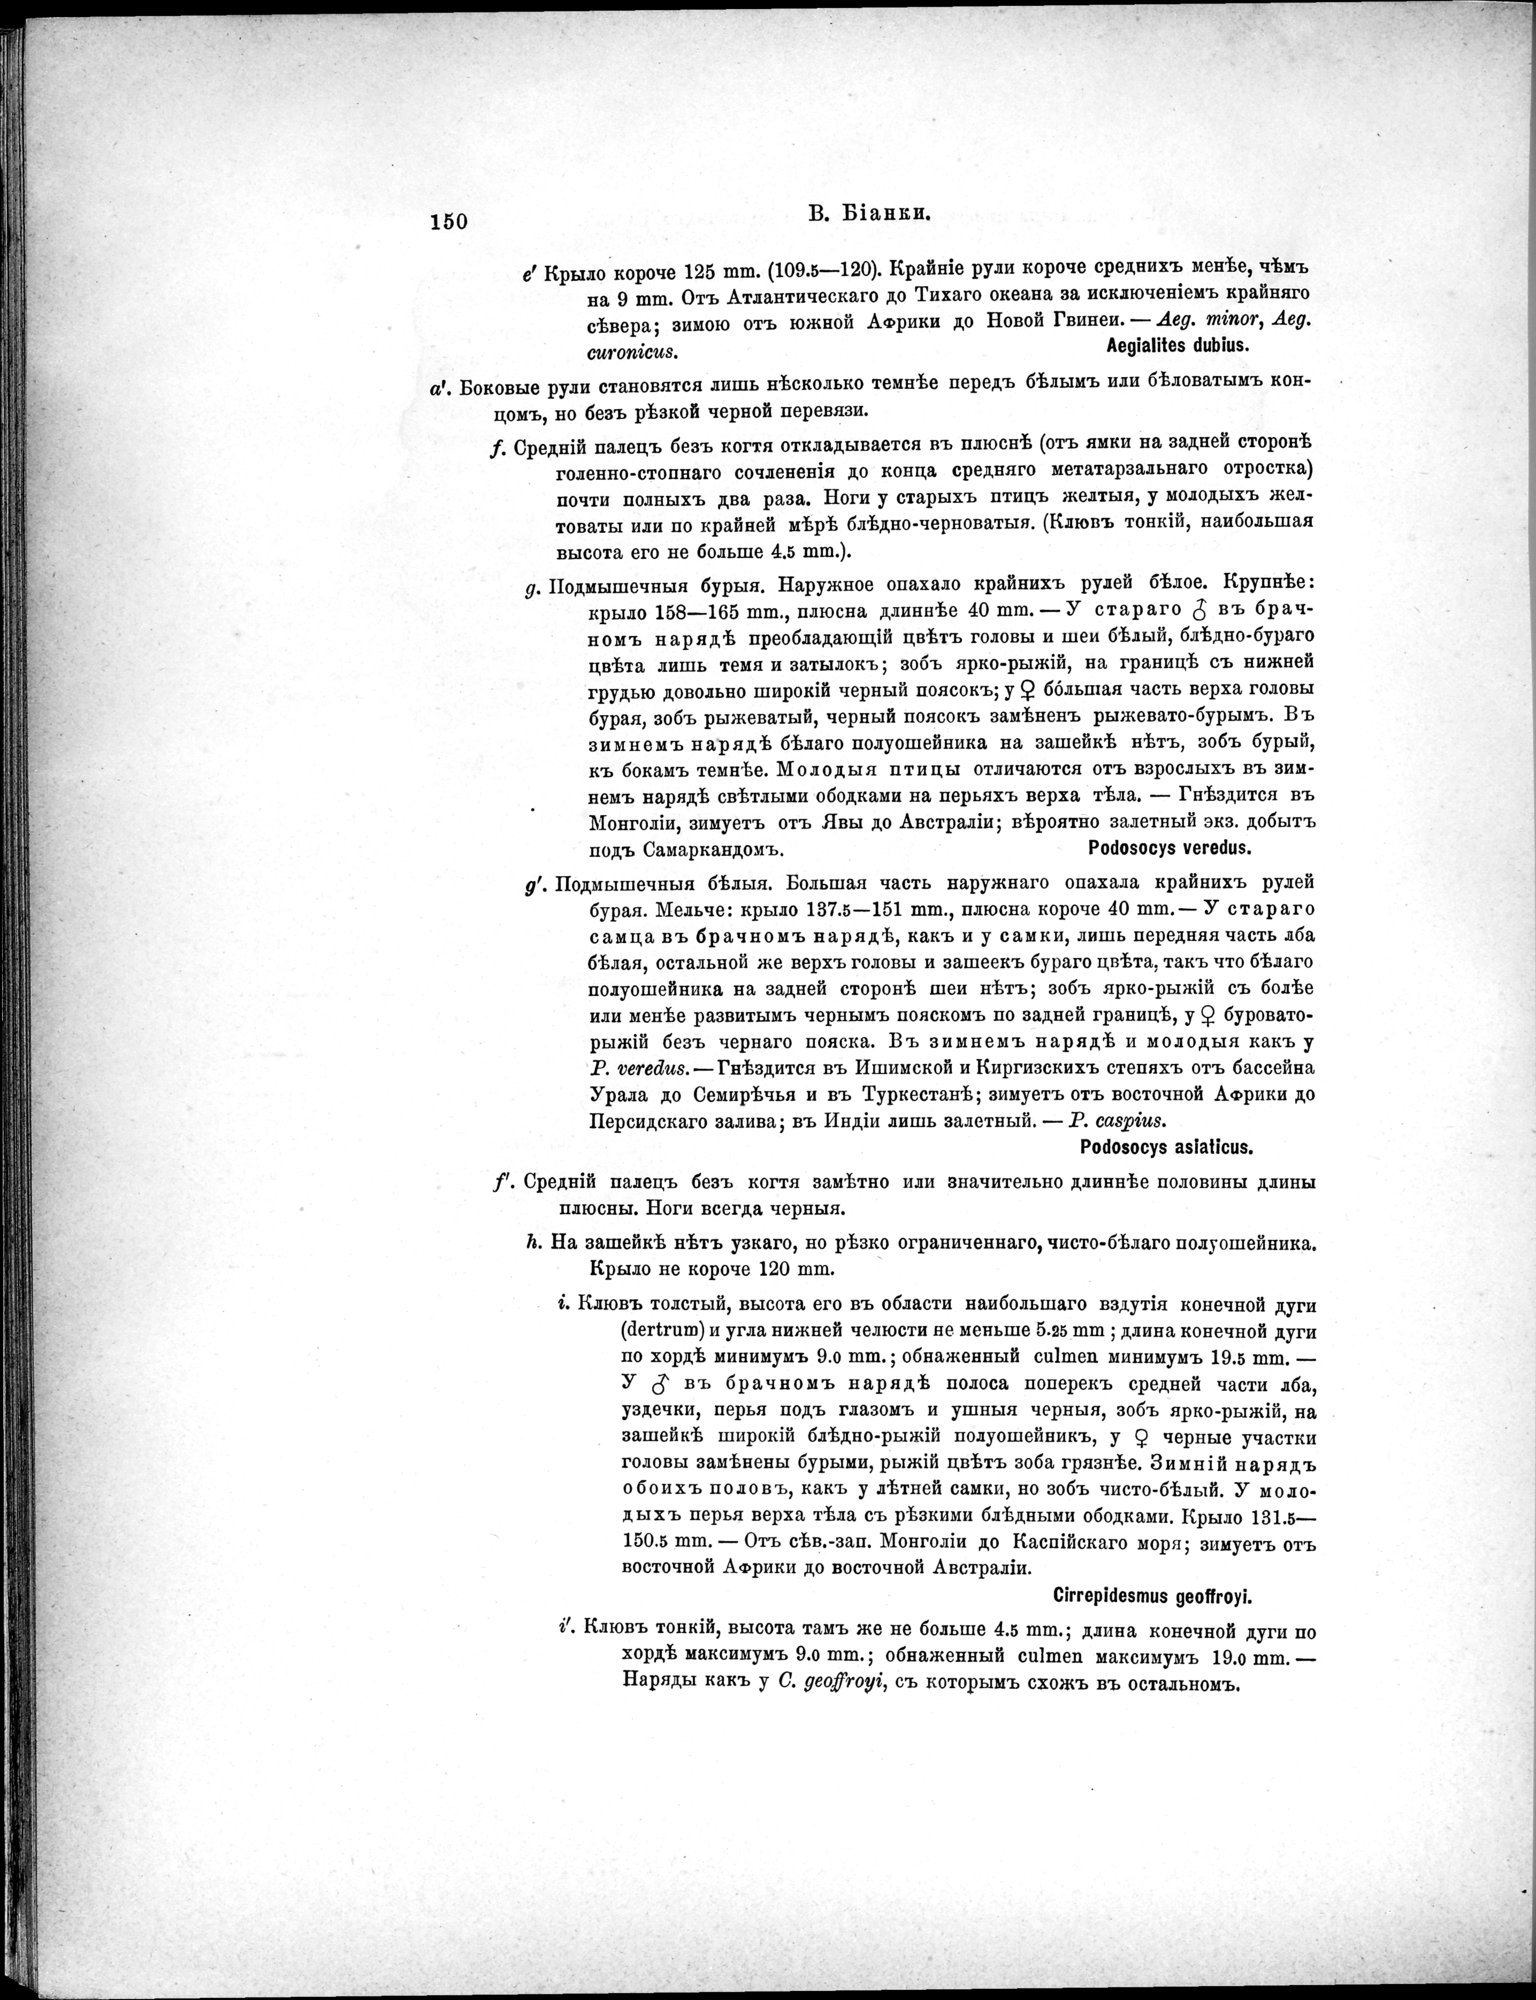 Mongoliia i Kam : vol.5 / Page 222 (Grayscale High Resolution Image)